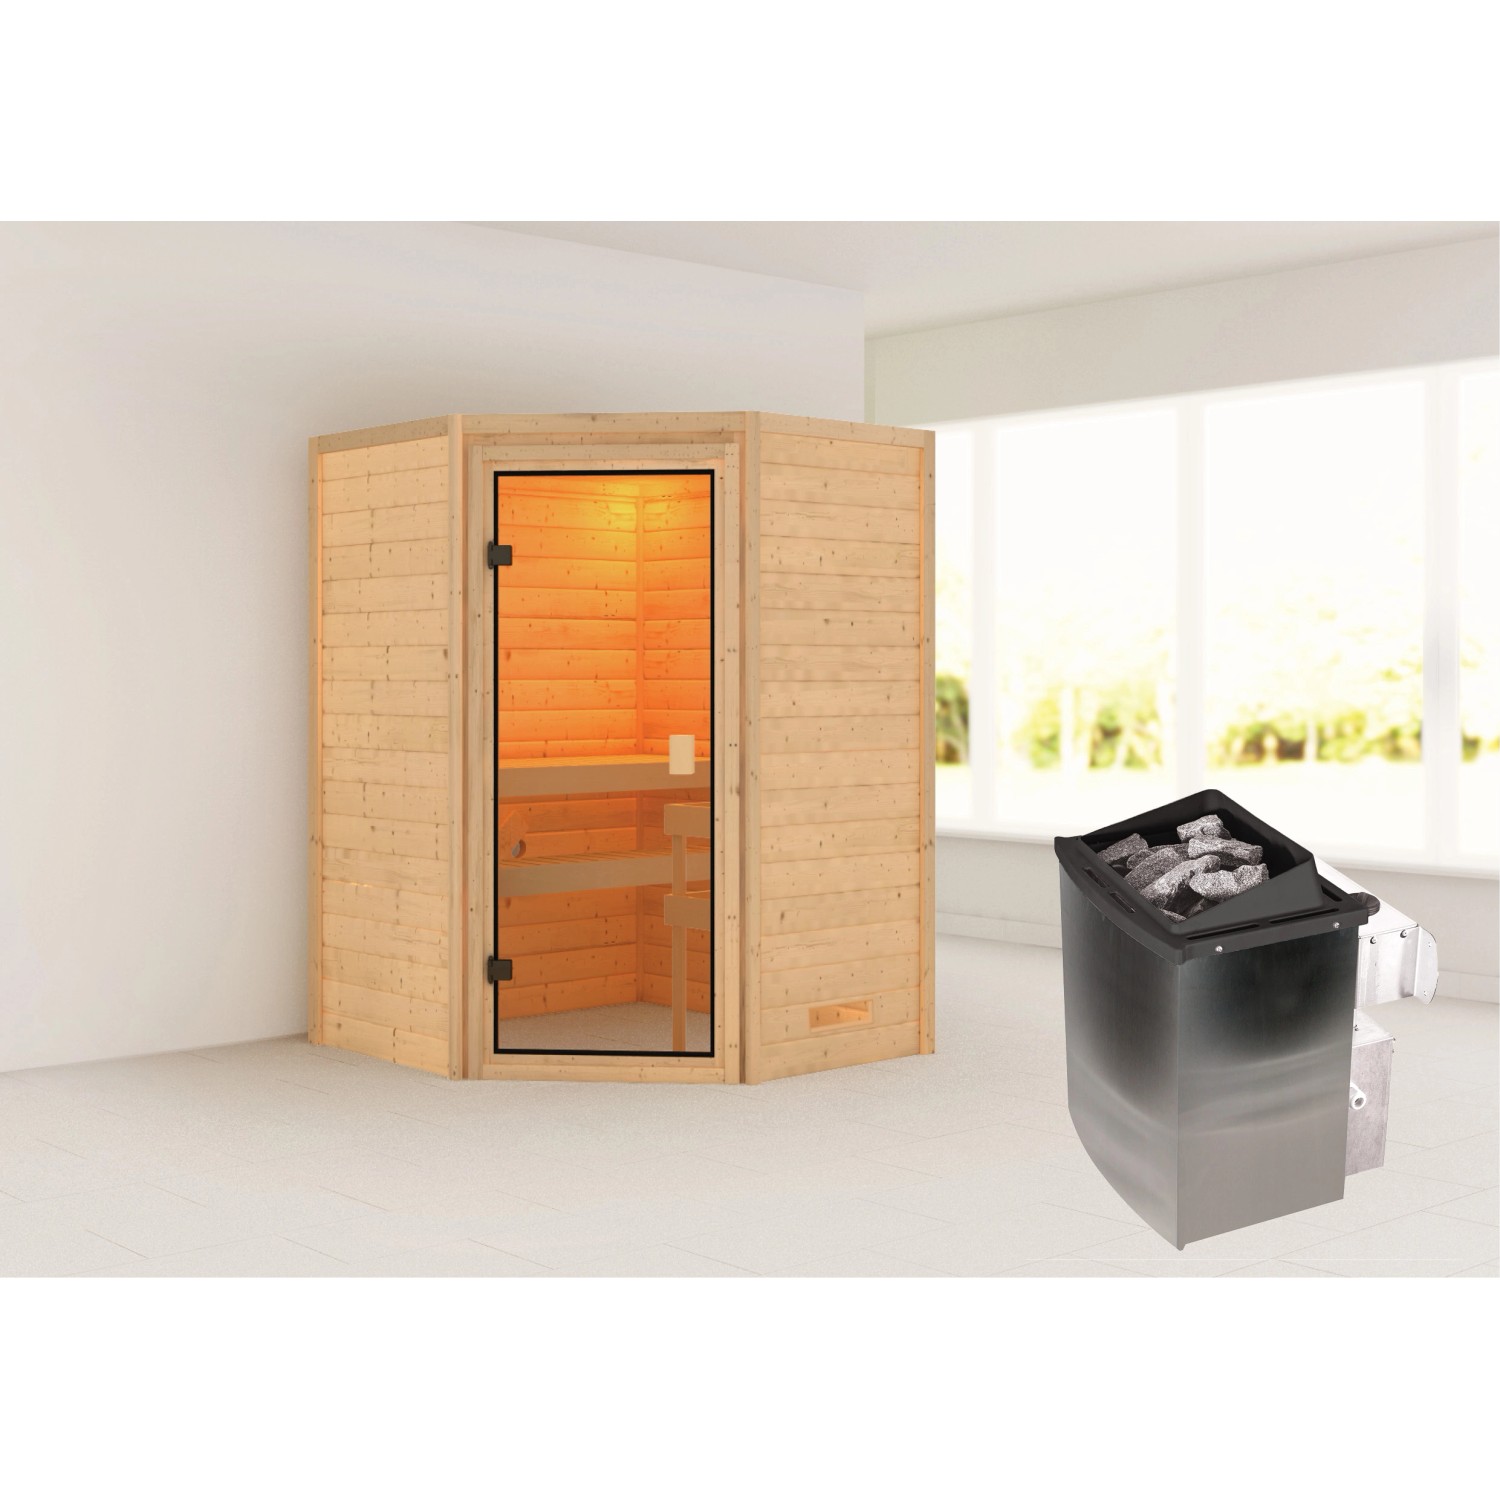 Woodfeeling Sauna Antonia inkl. 9 kW Ofen mit integr. Strg. Glastür von Woodfeeling